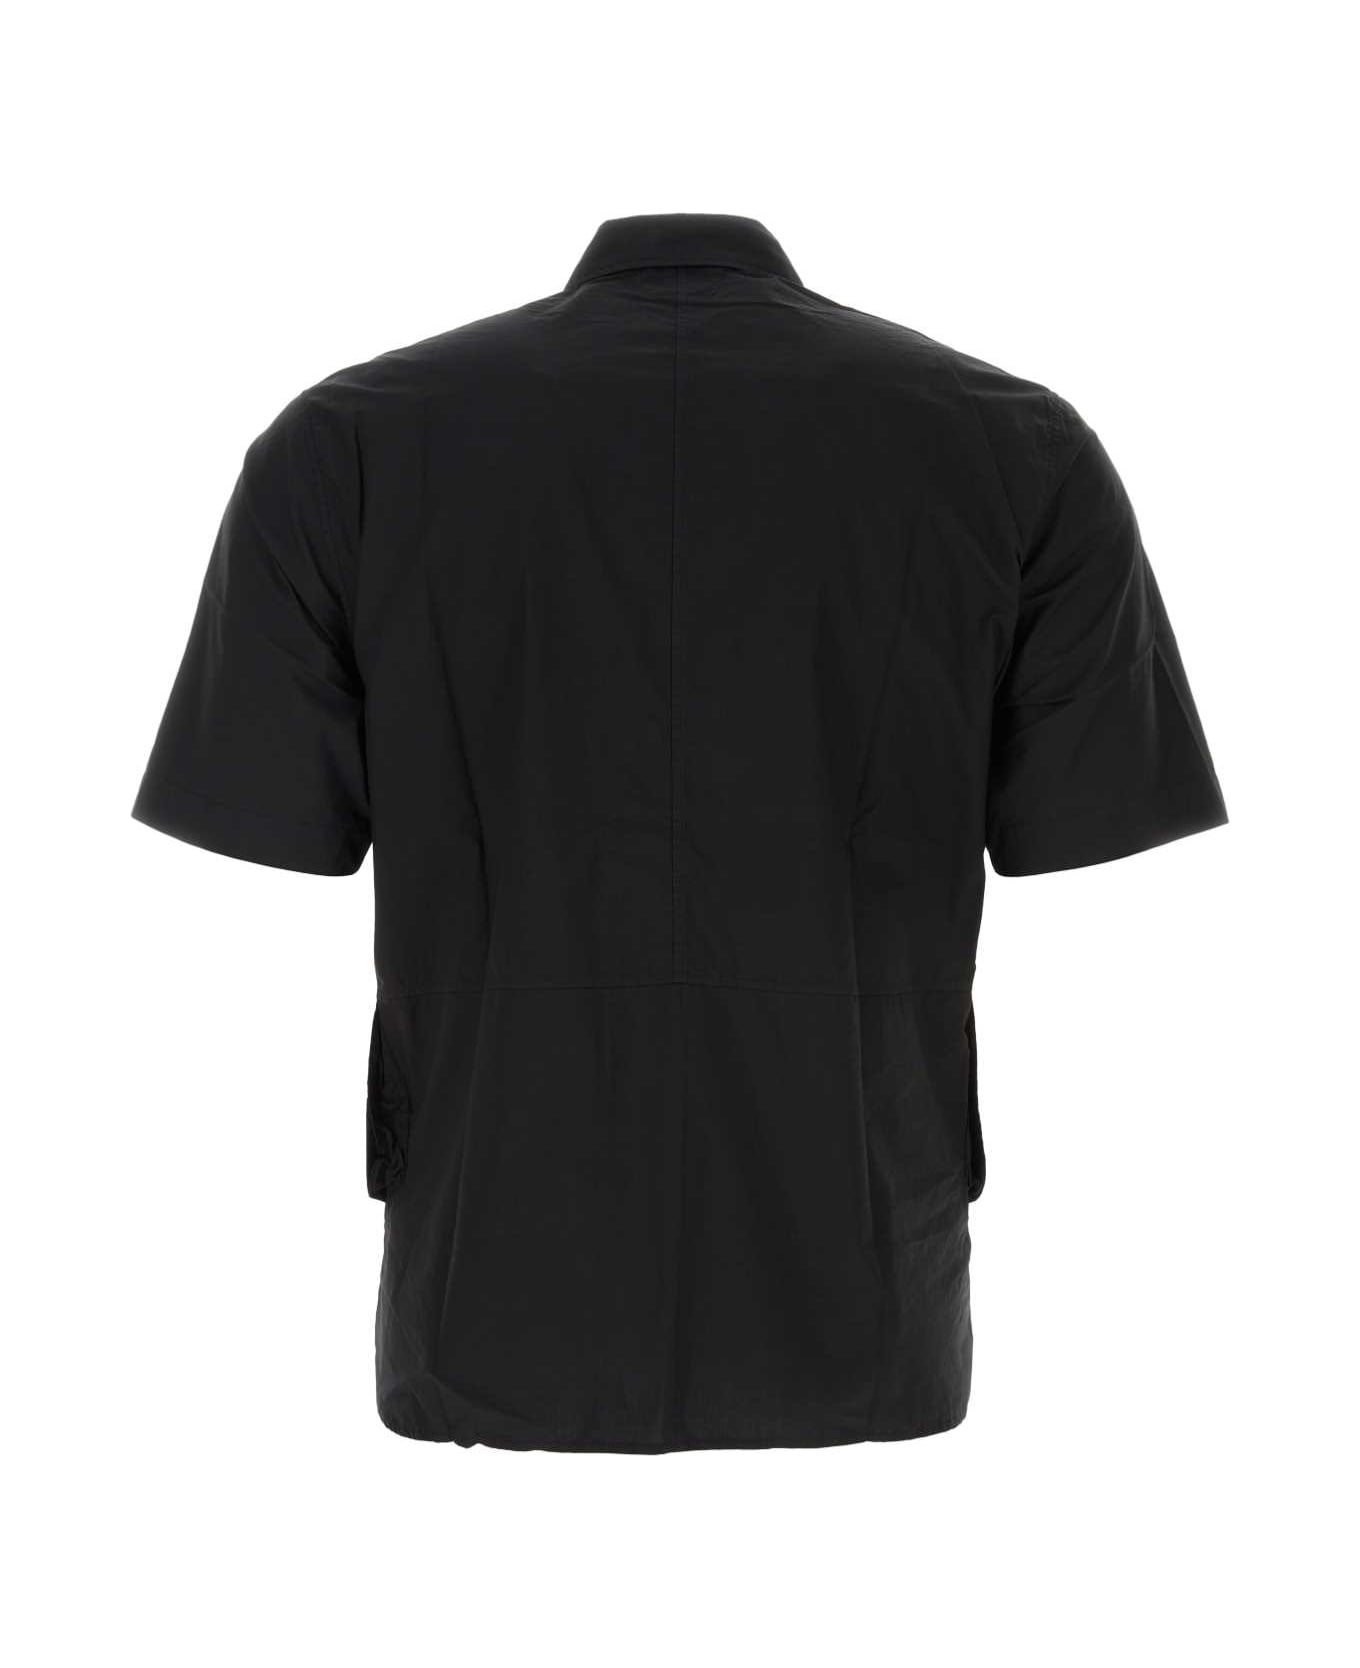 C.P. Company Black Cotton Shirt - Black シャツ